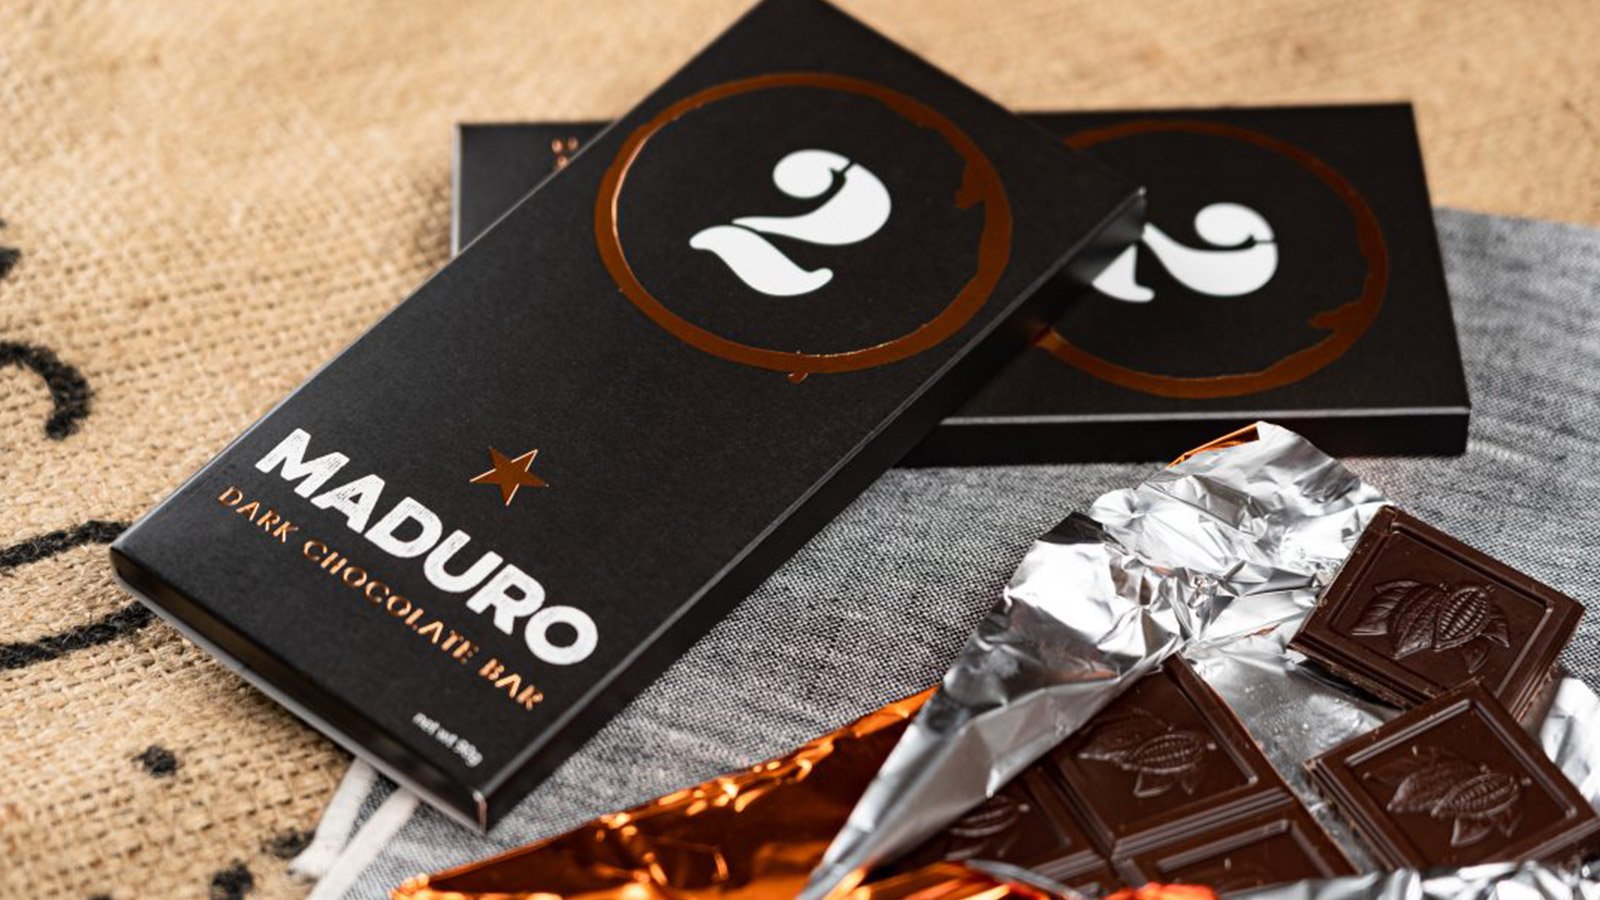 Maduro chocolate bar wrapper